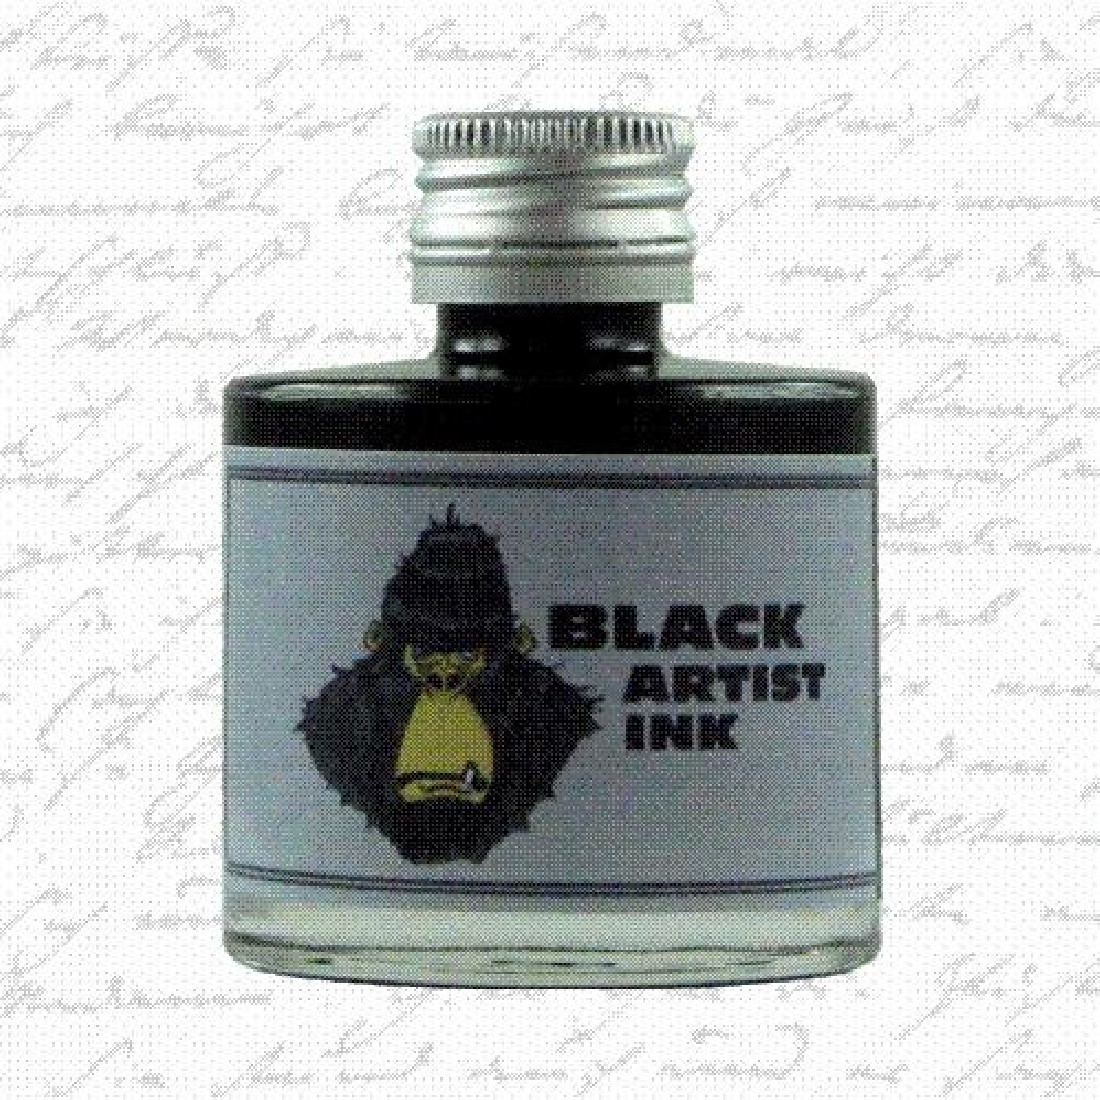 De Atramentis artist ink 50ml Black